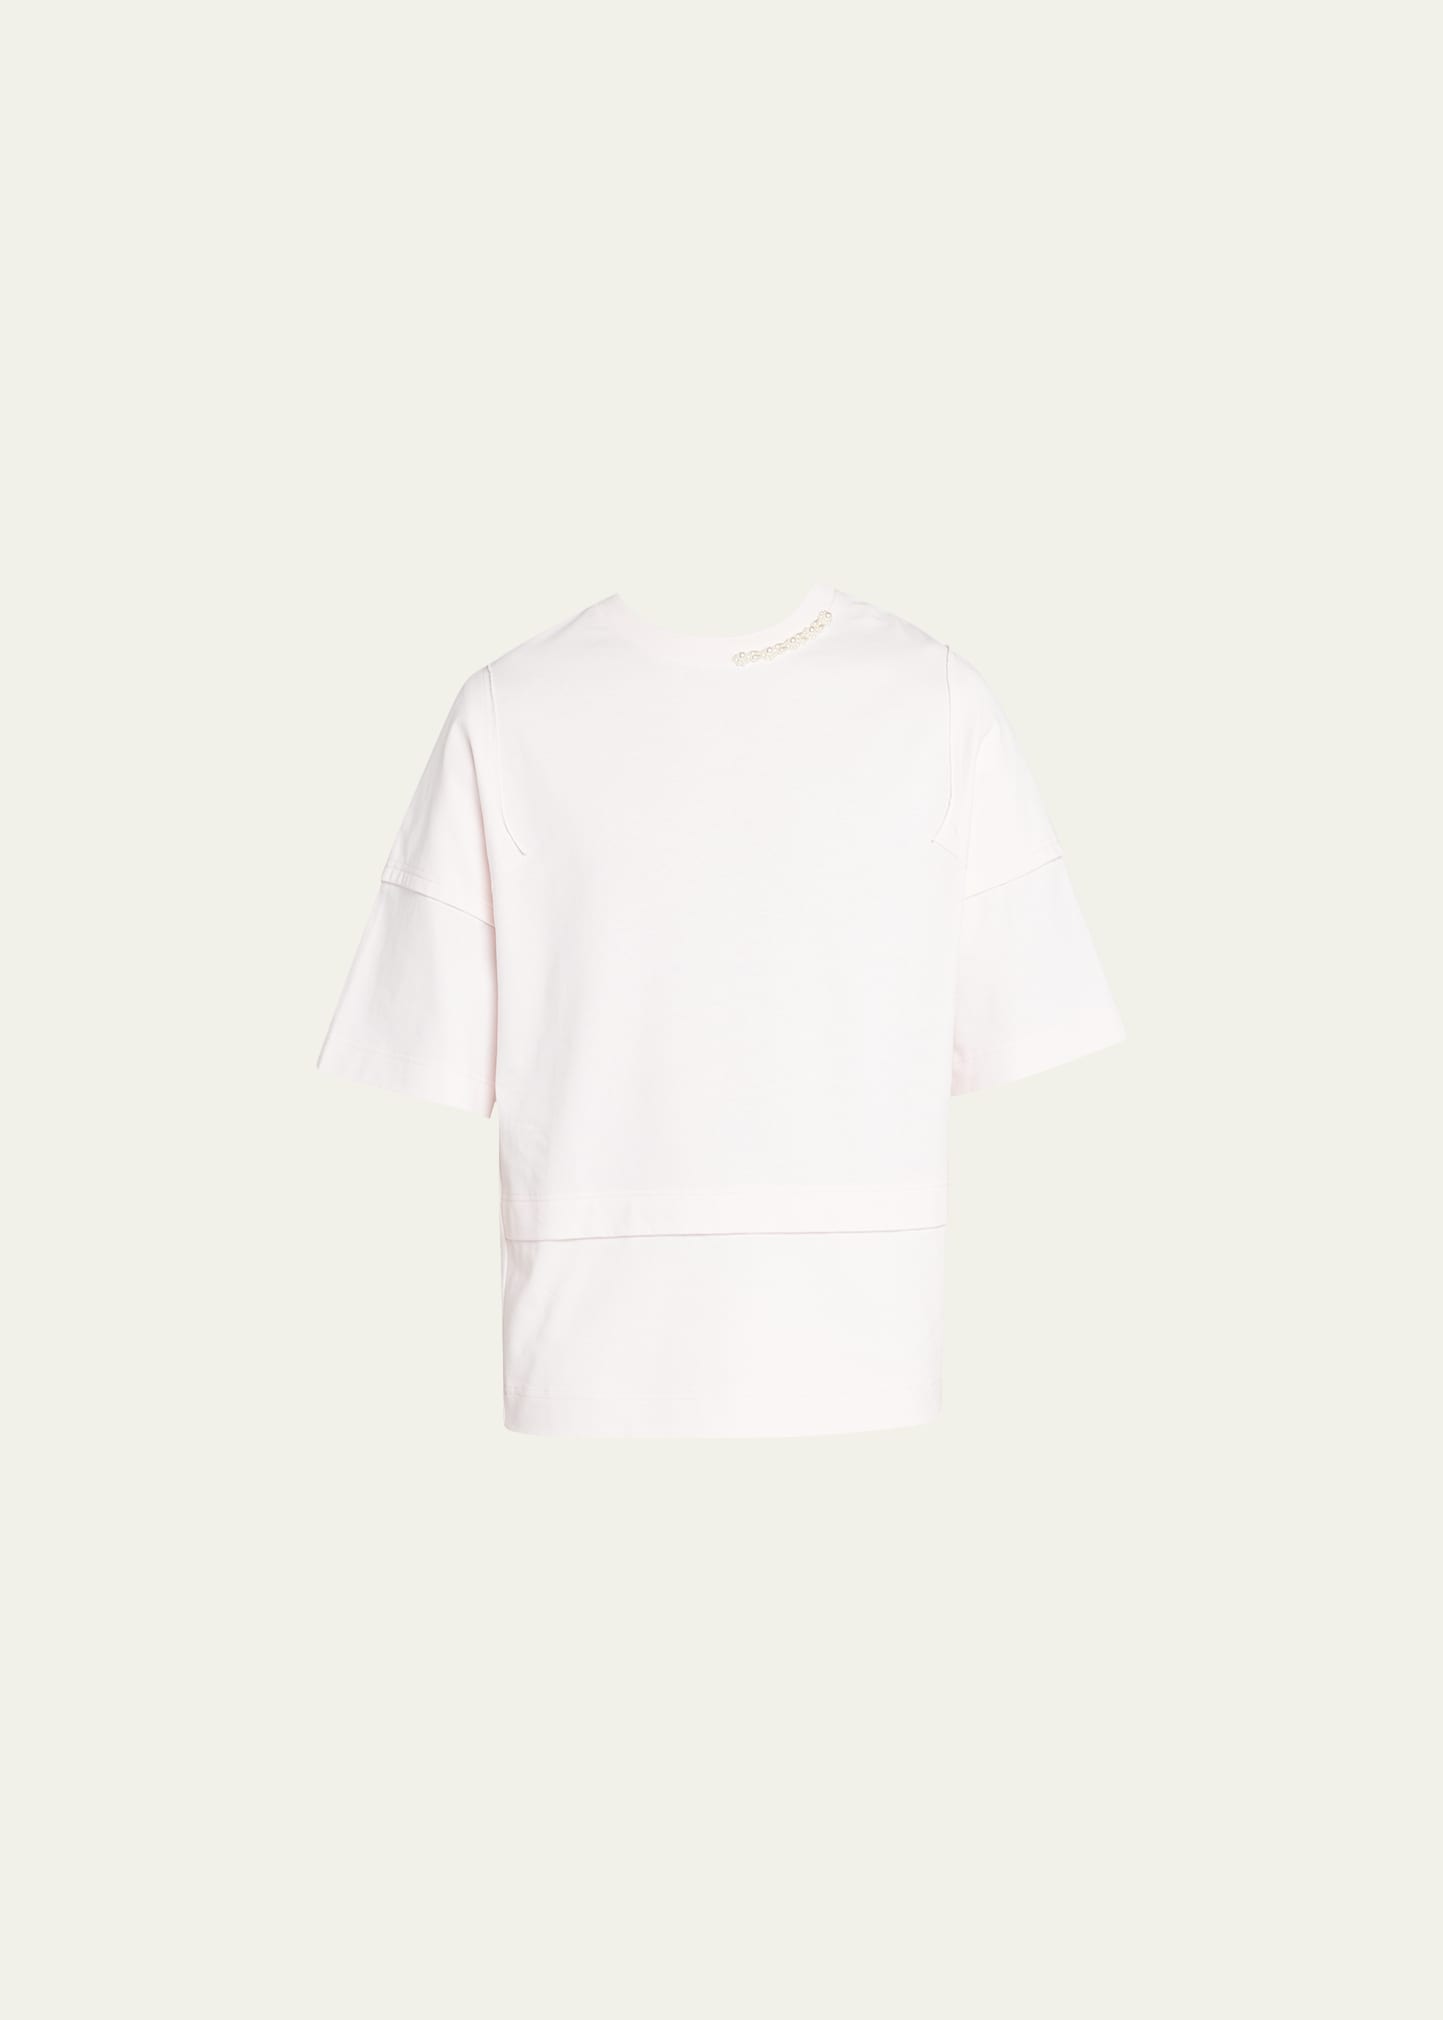 Simone Rocha Men's Embellished-Collar Patchwork T-Shirt